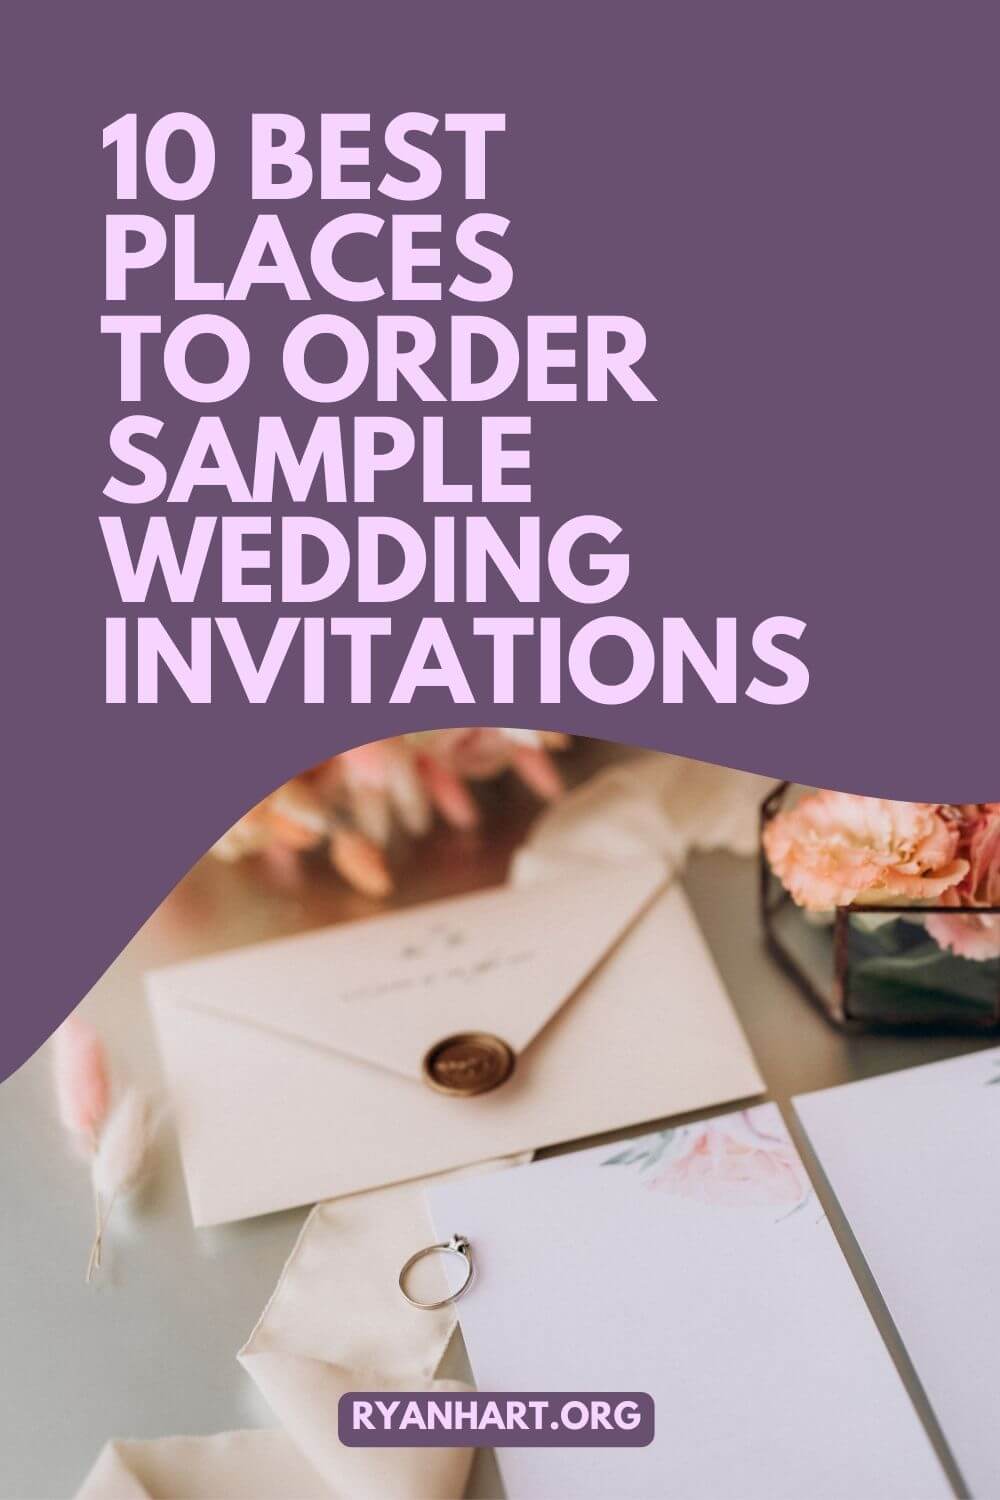 Wedding invitation ideas